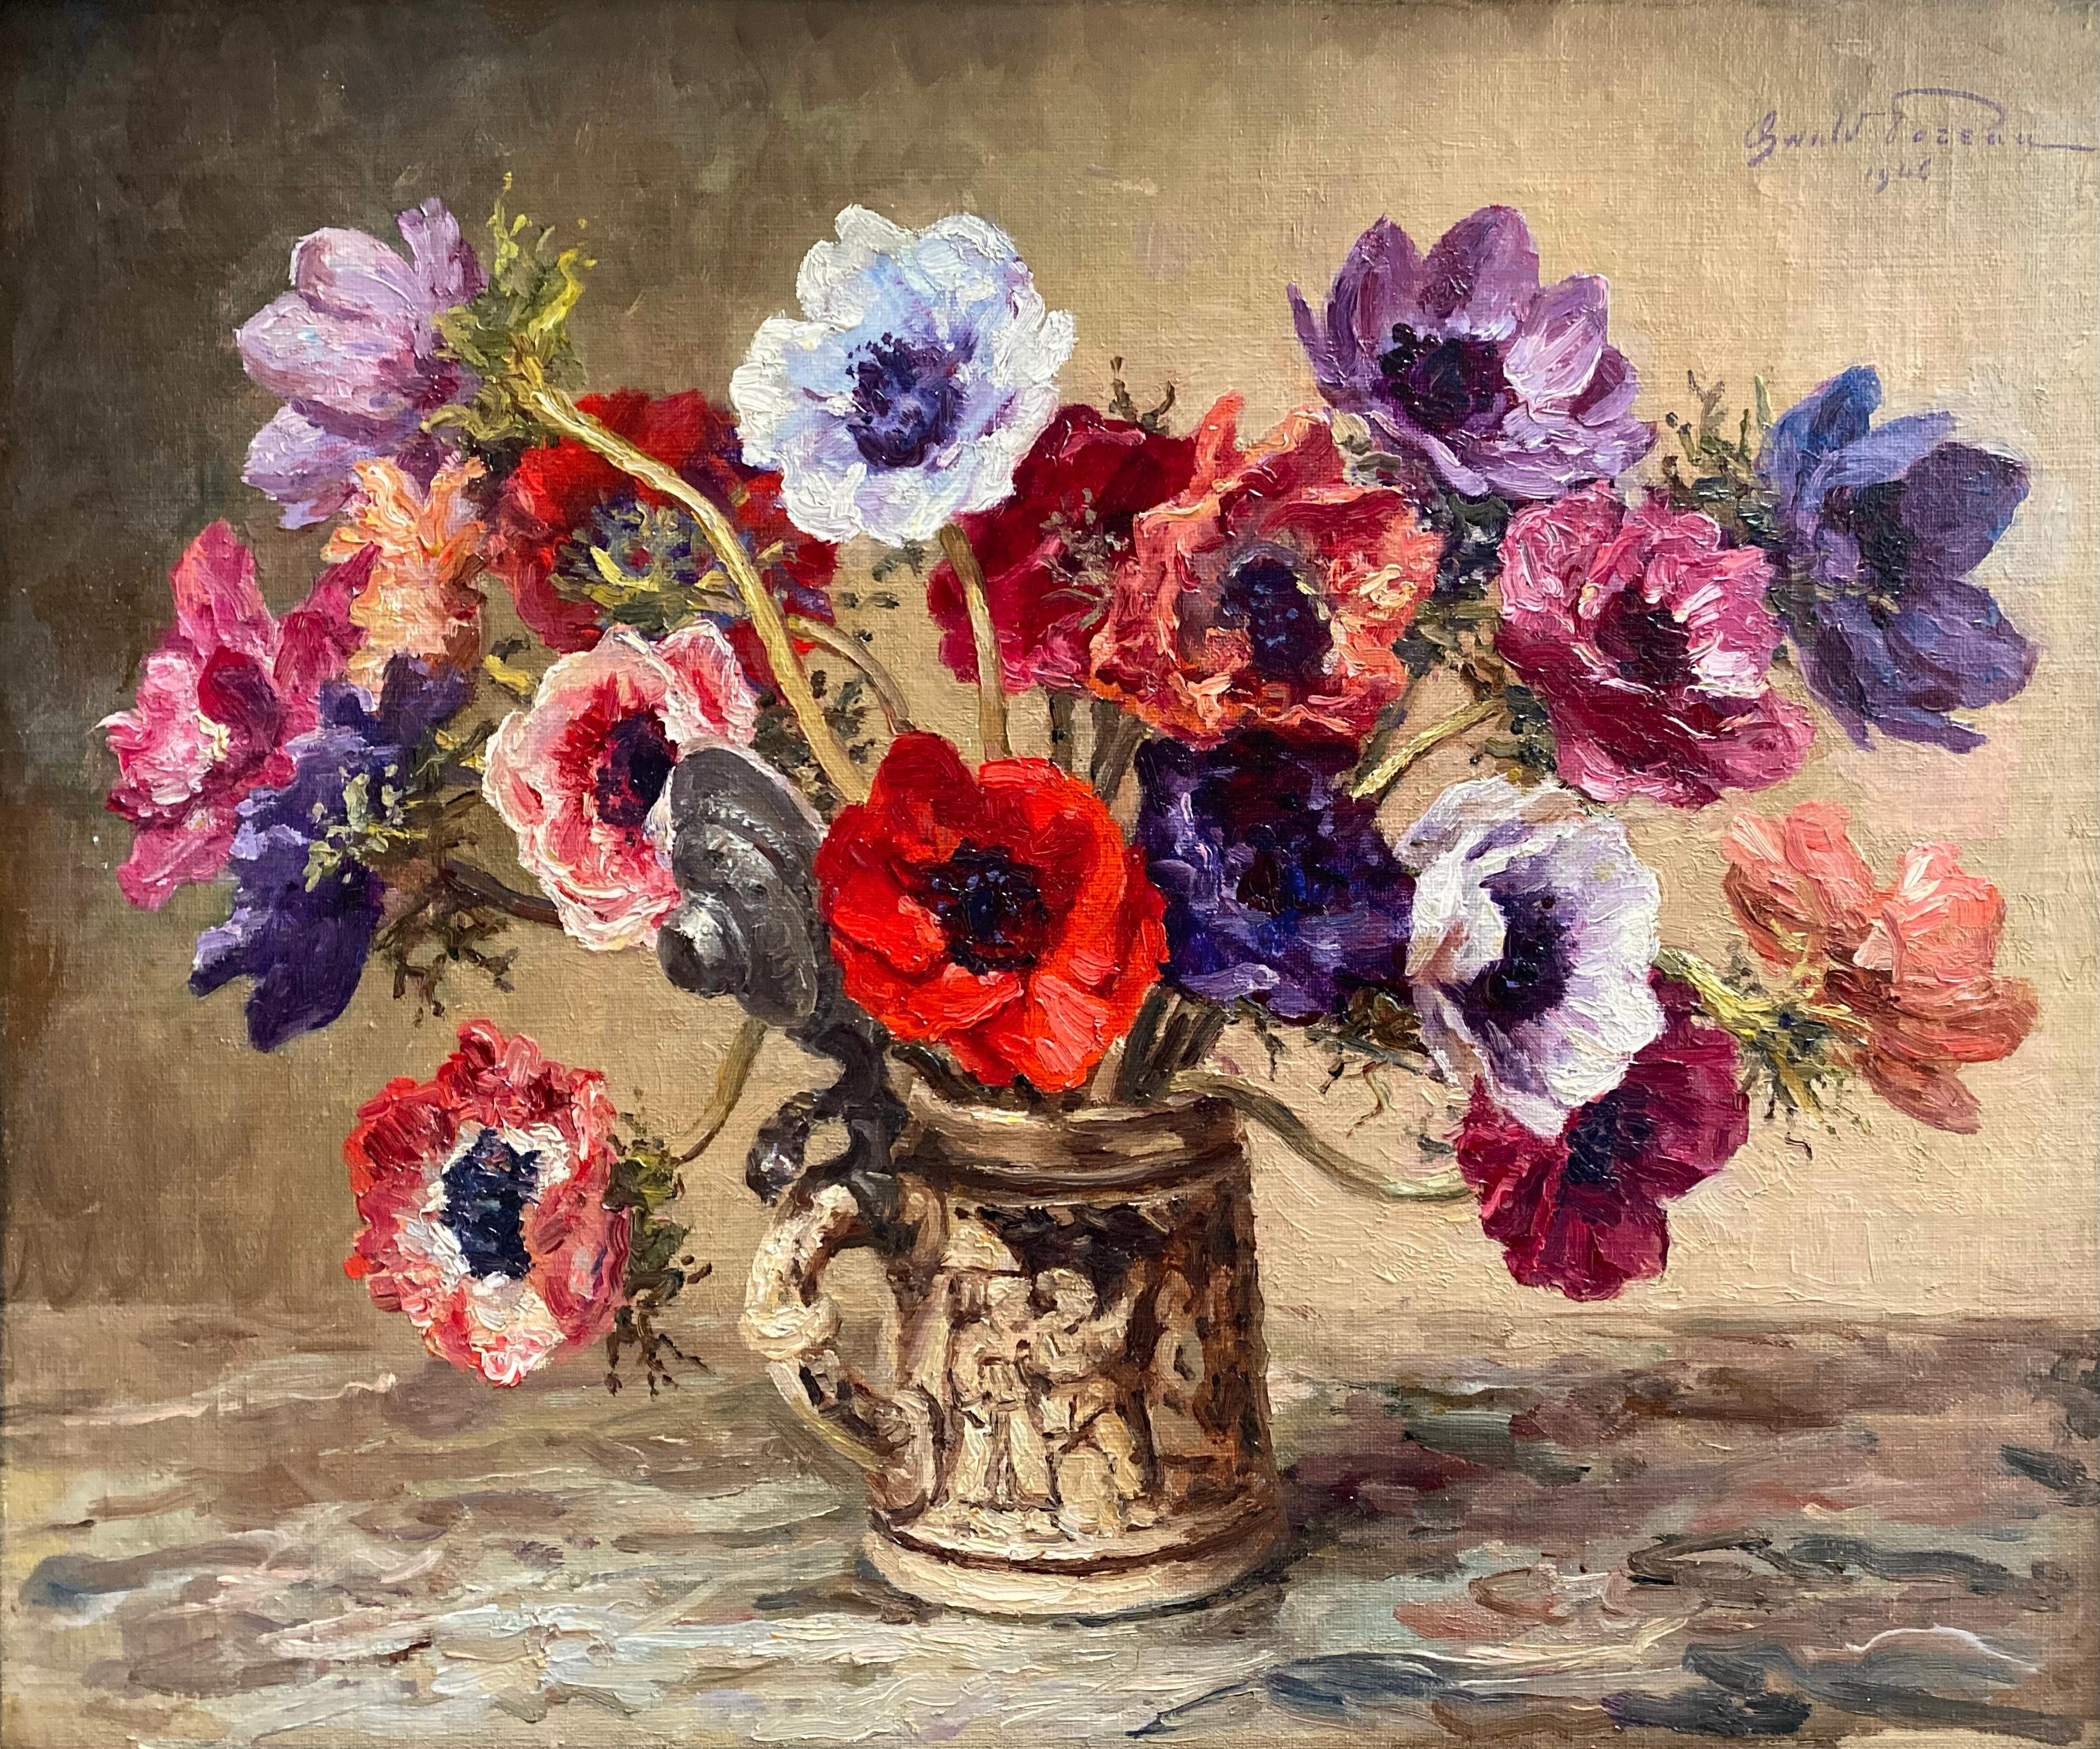 Oswald Poreau, Brussels 1877 -  1955 Waterloo, Belgian Painter,  ‘Anemones’ For Sale 1